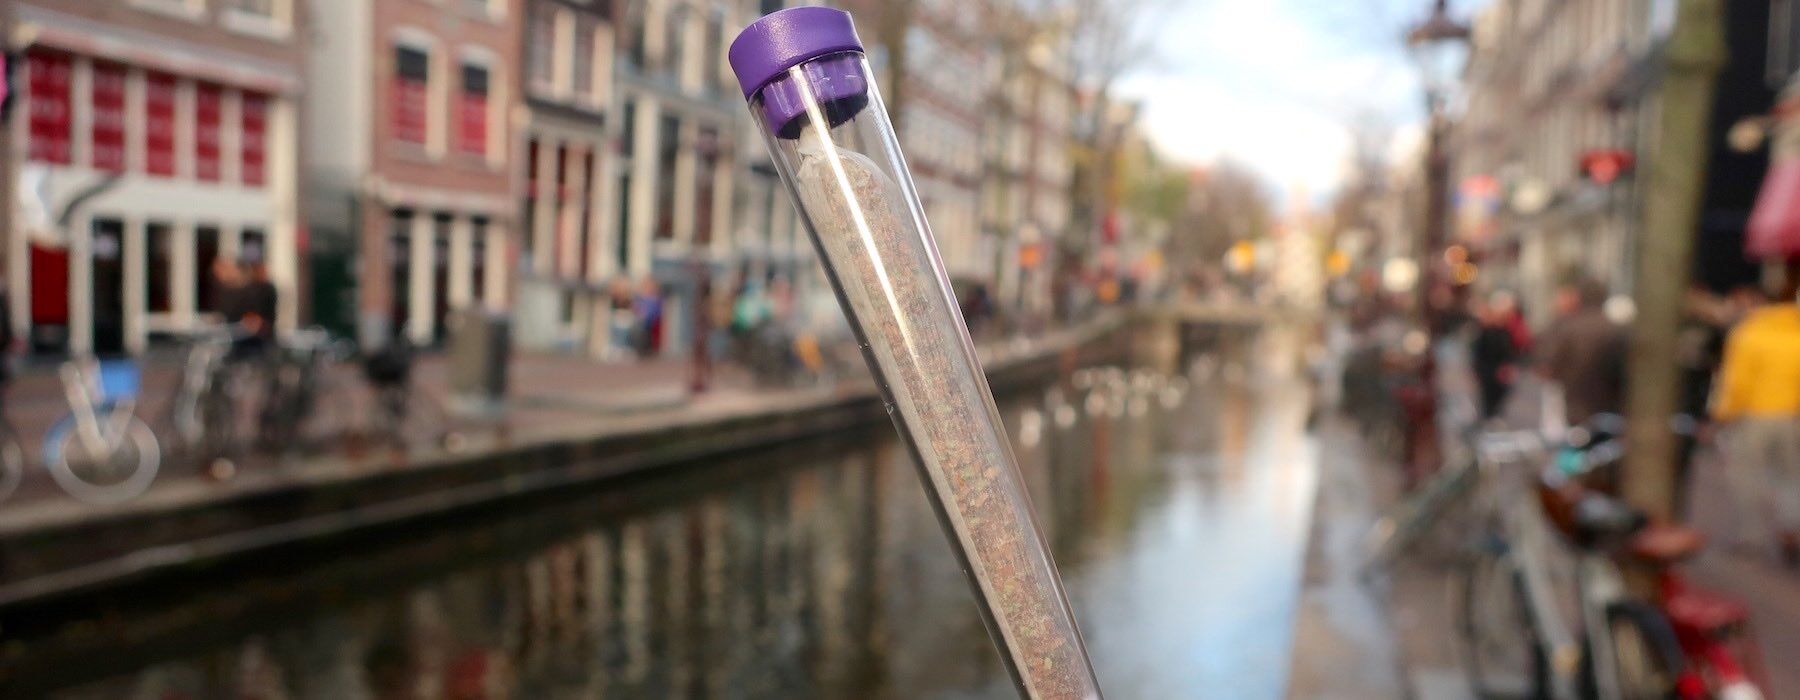 drugs in netherlands amsterdam